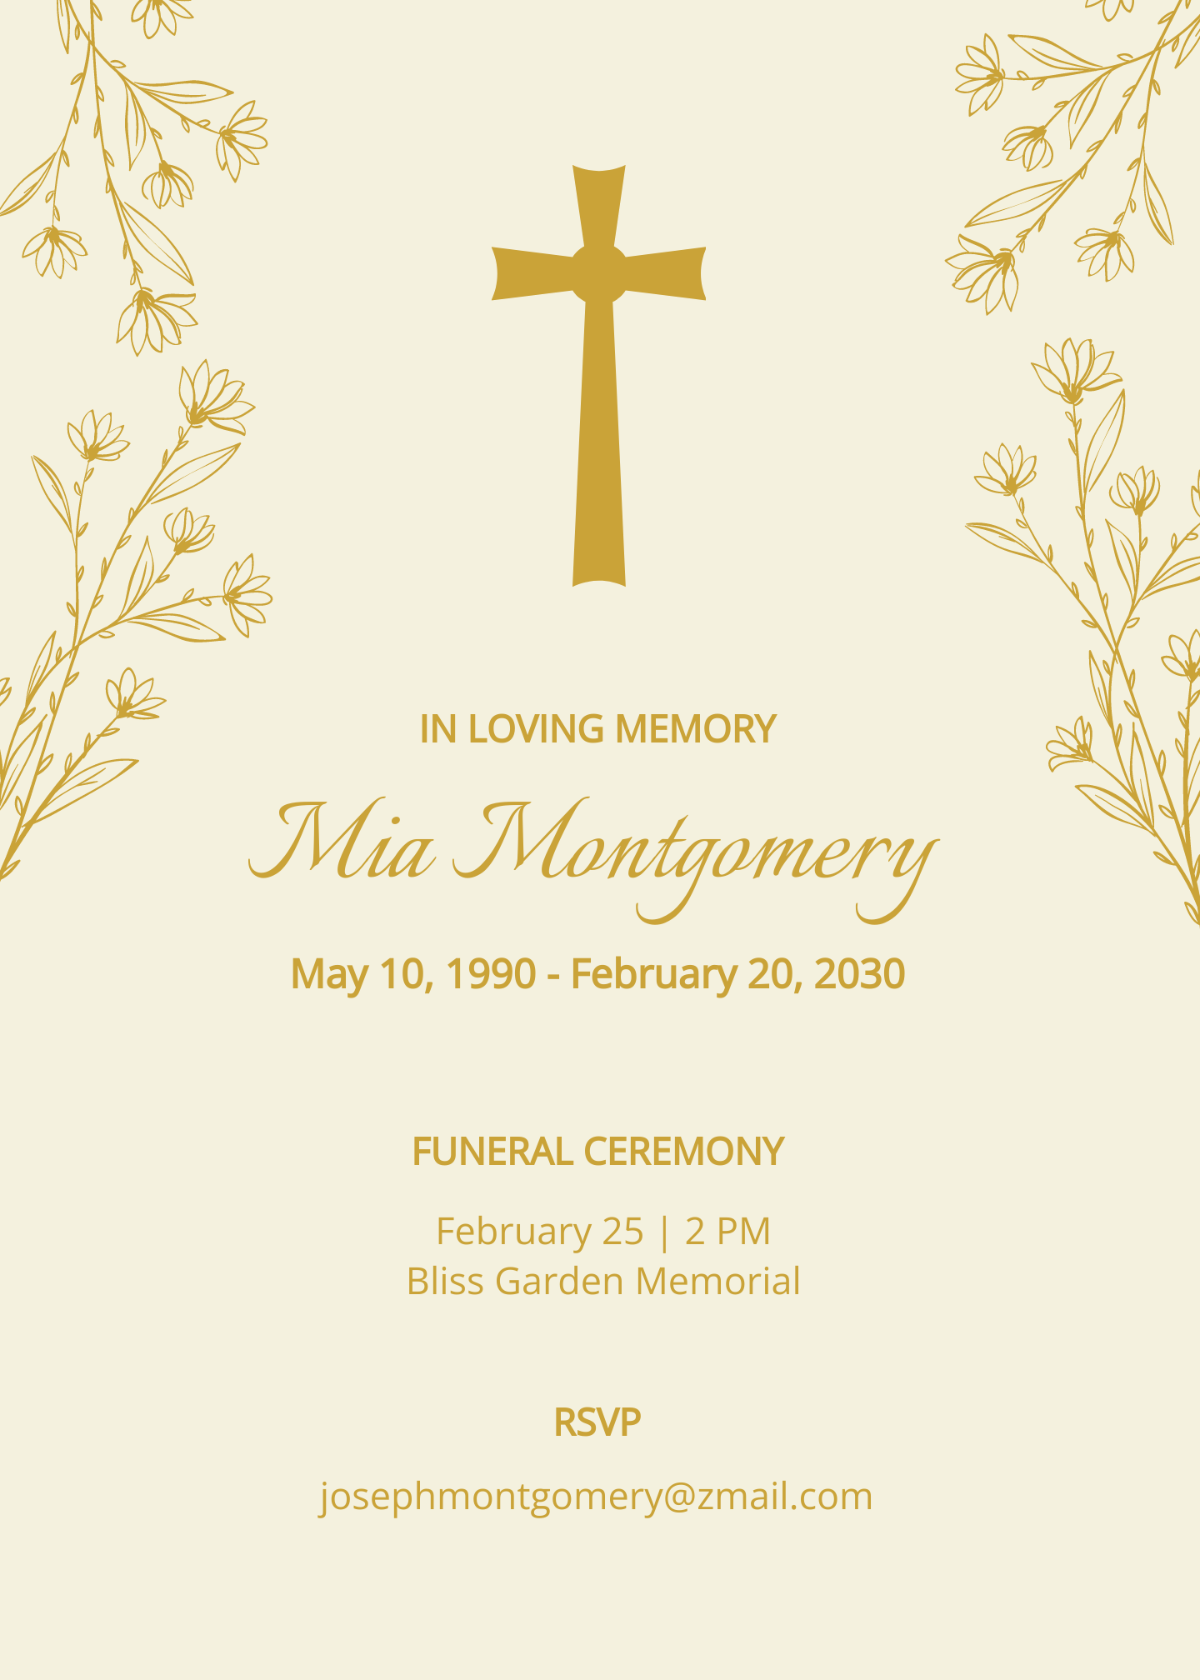 Sample Funeral Ceremony Invitation Template